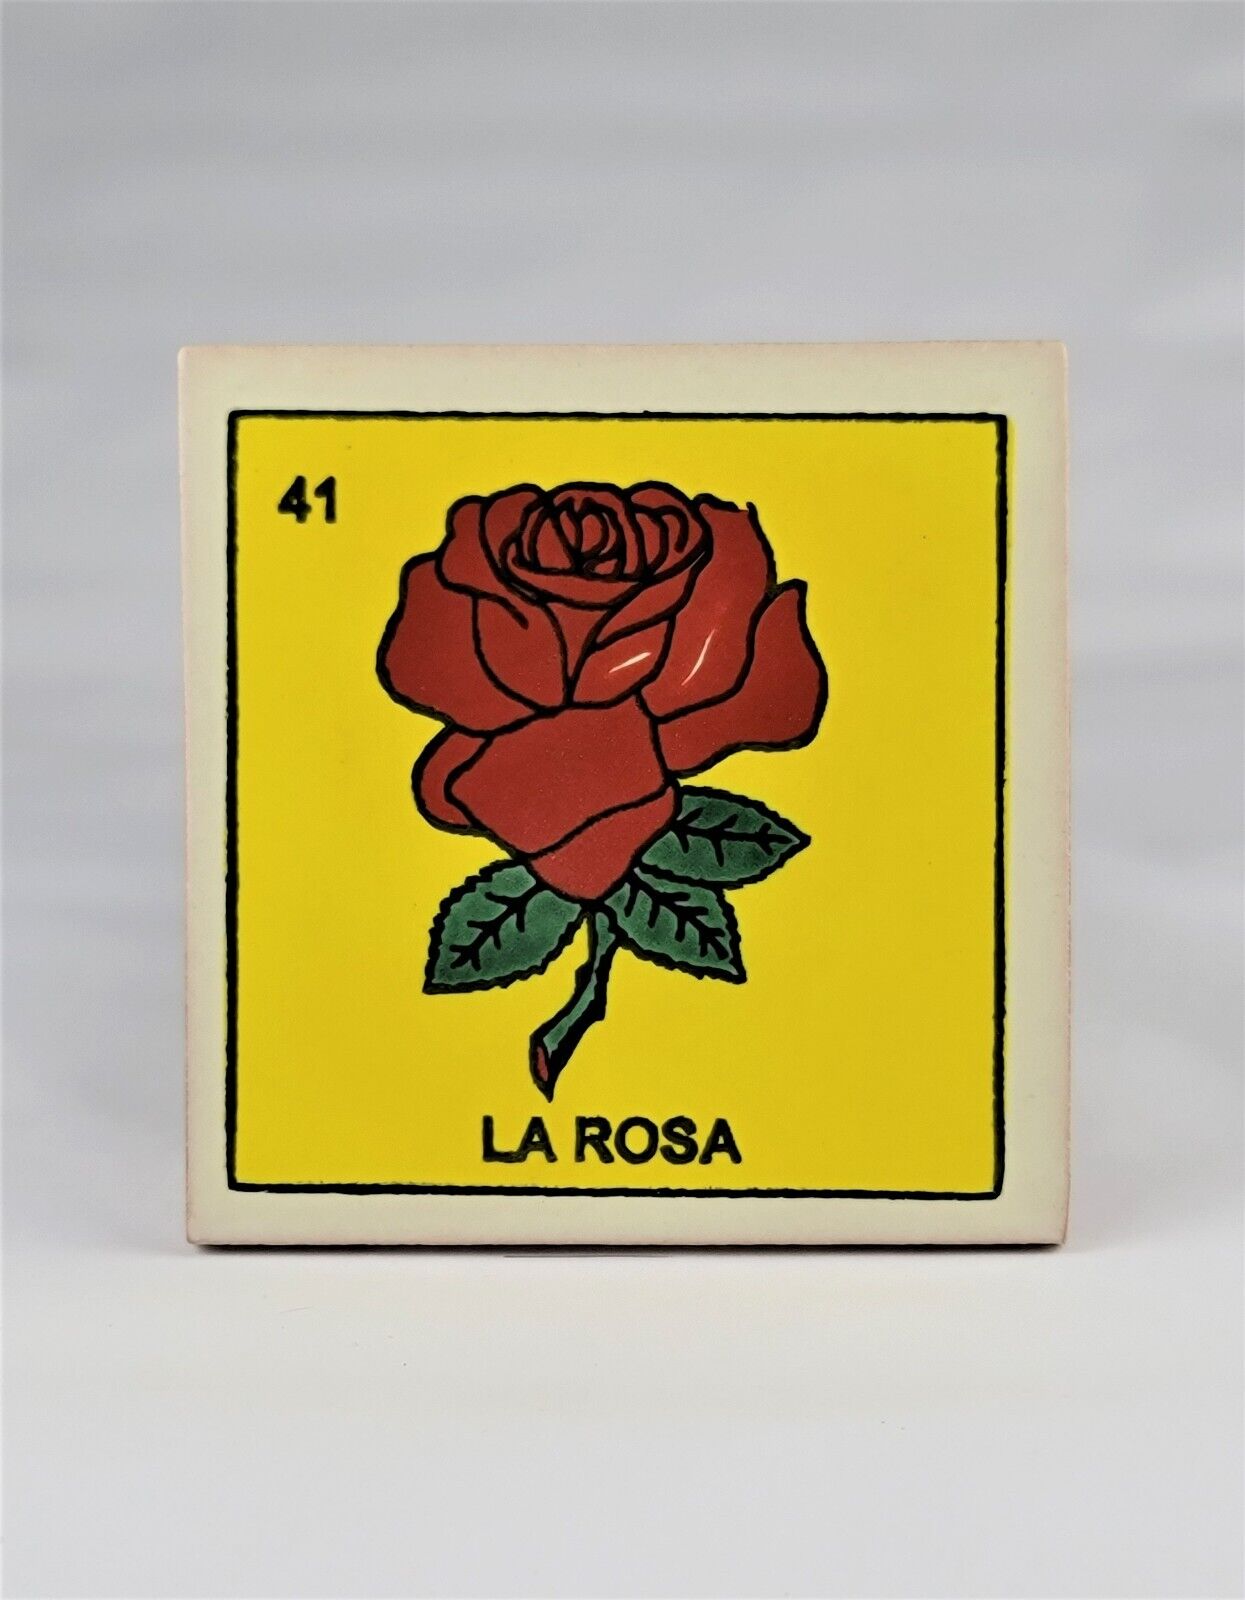 Mexican Loteria Tile Assorted Multi Purpose Drink Coasters #41 La Rosa 4x4